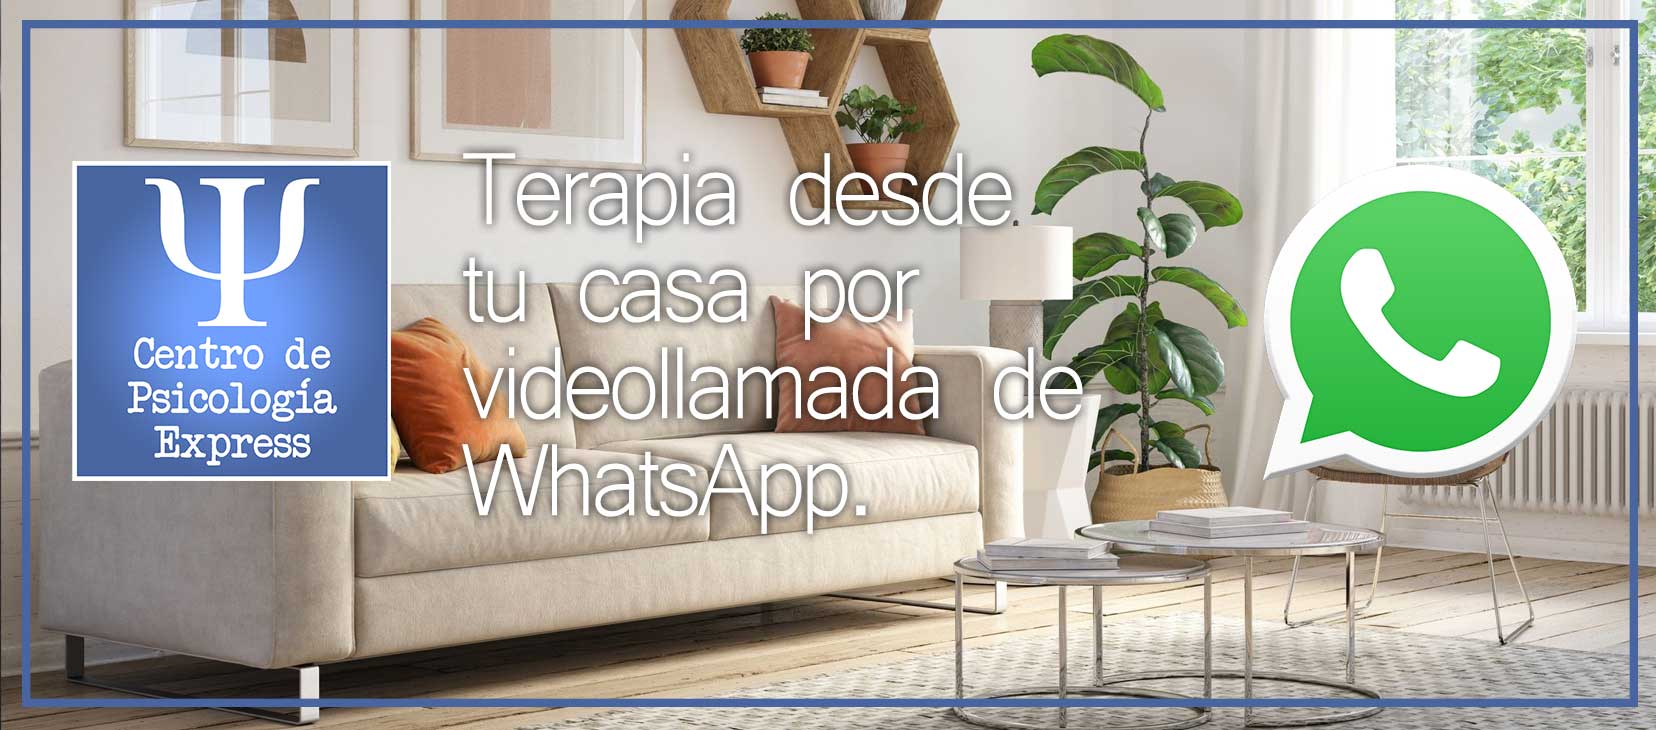 terapiaDesdeTuCasa whatsApp